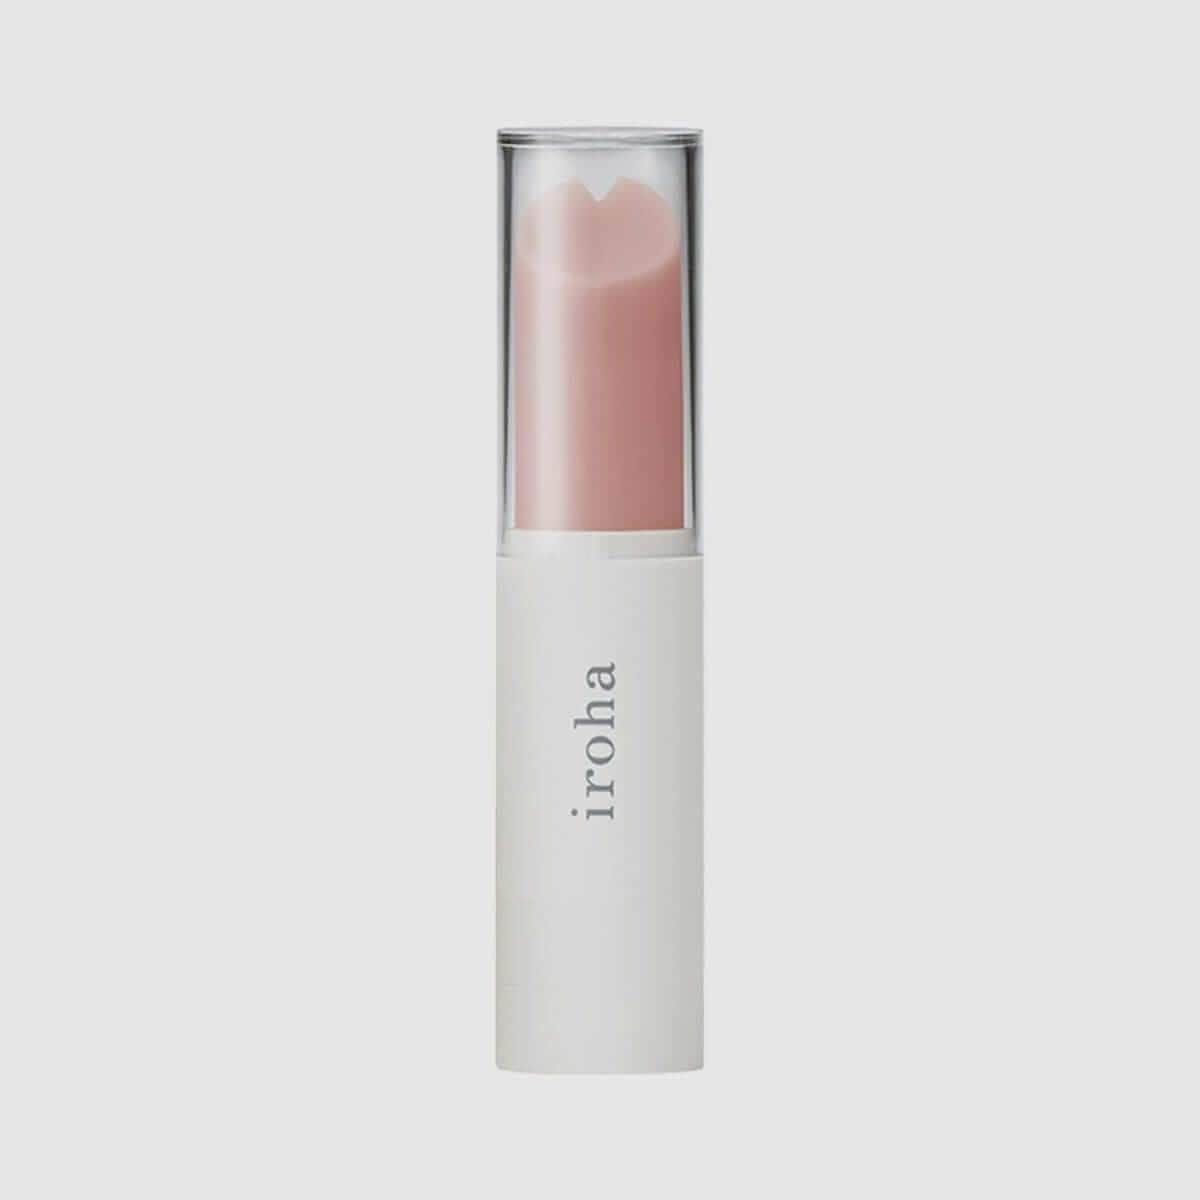 Iroha Stick Portable Pleasure Massage Vibrator - Light Pink × White - Thorn & Feather